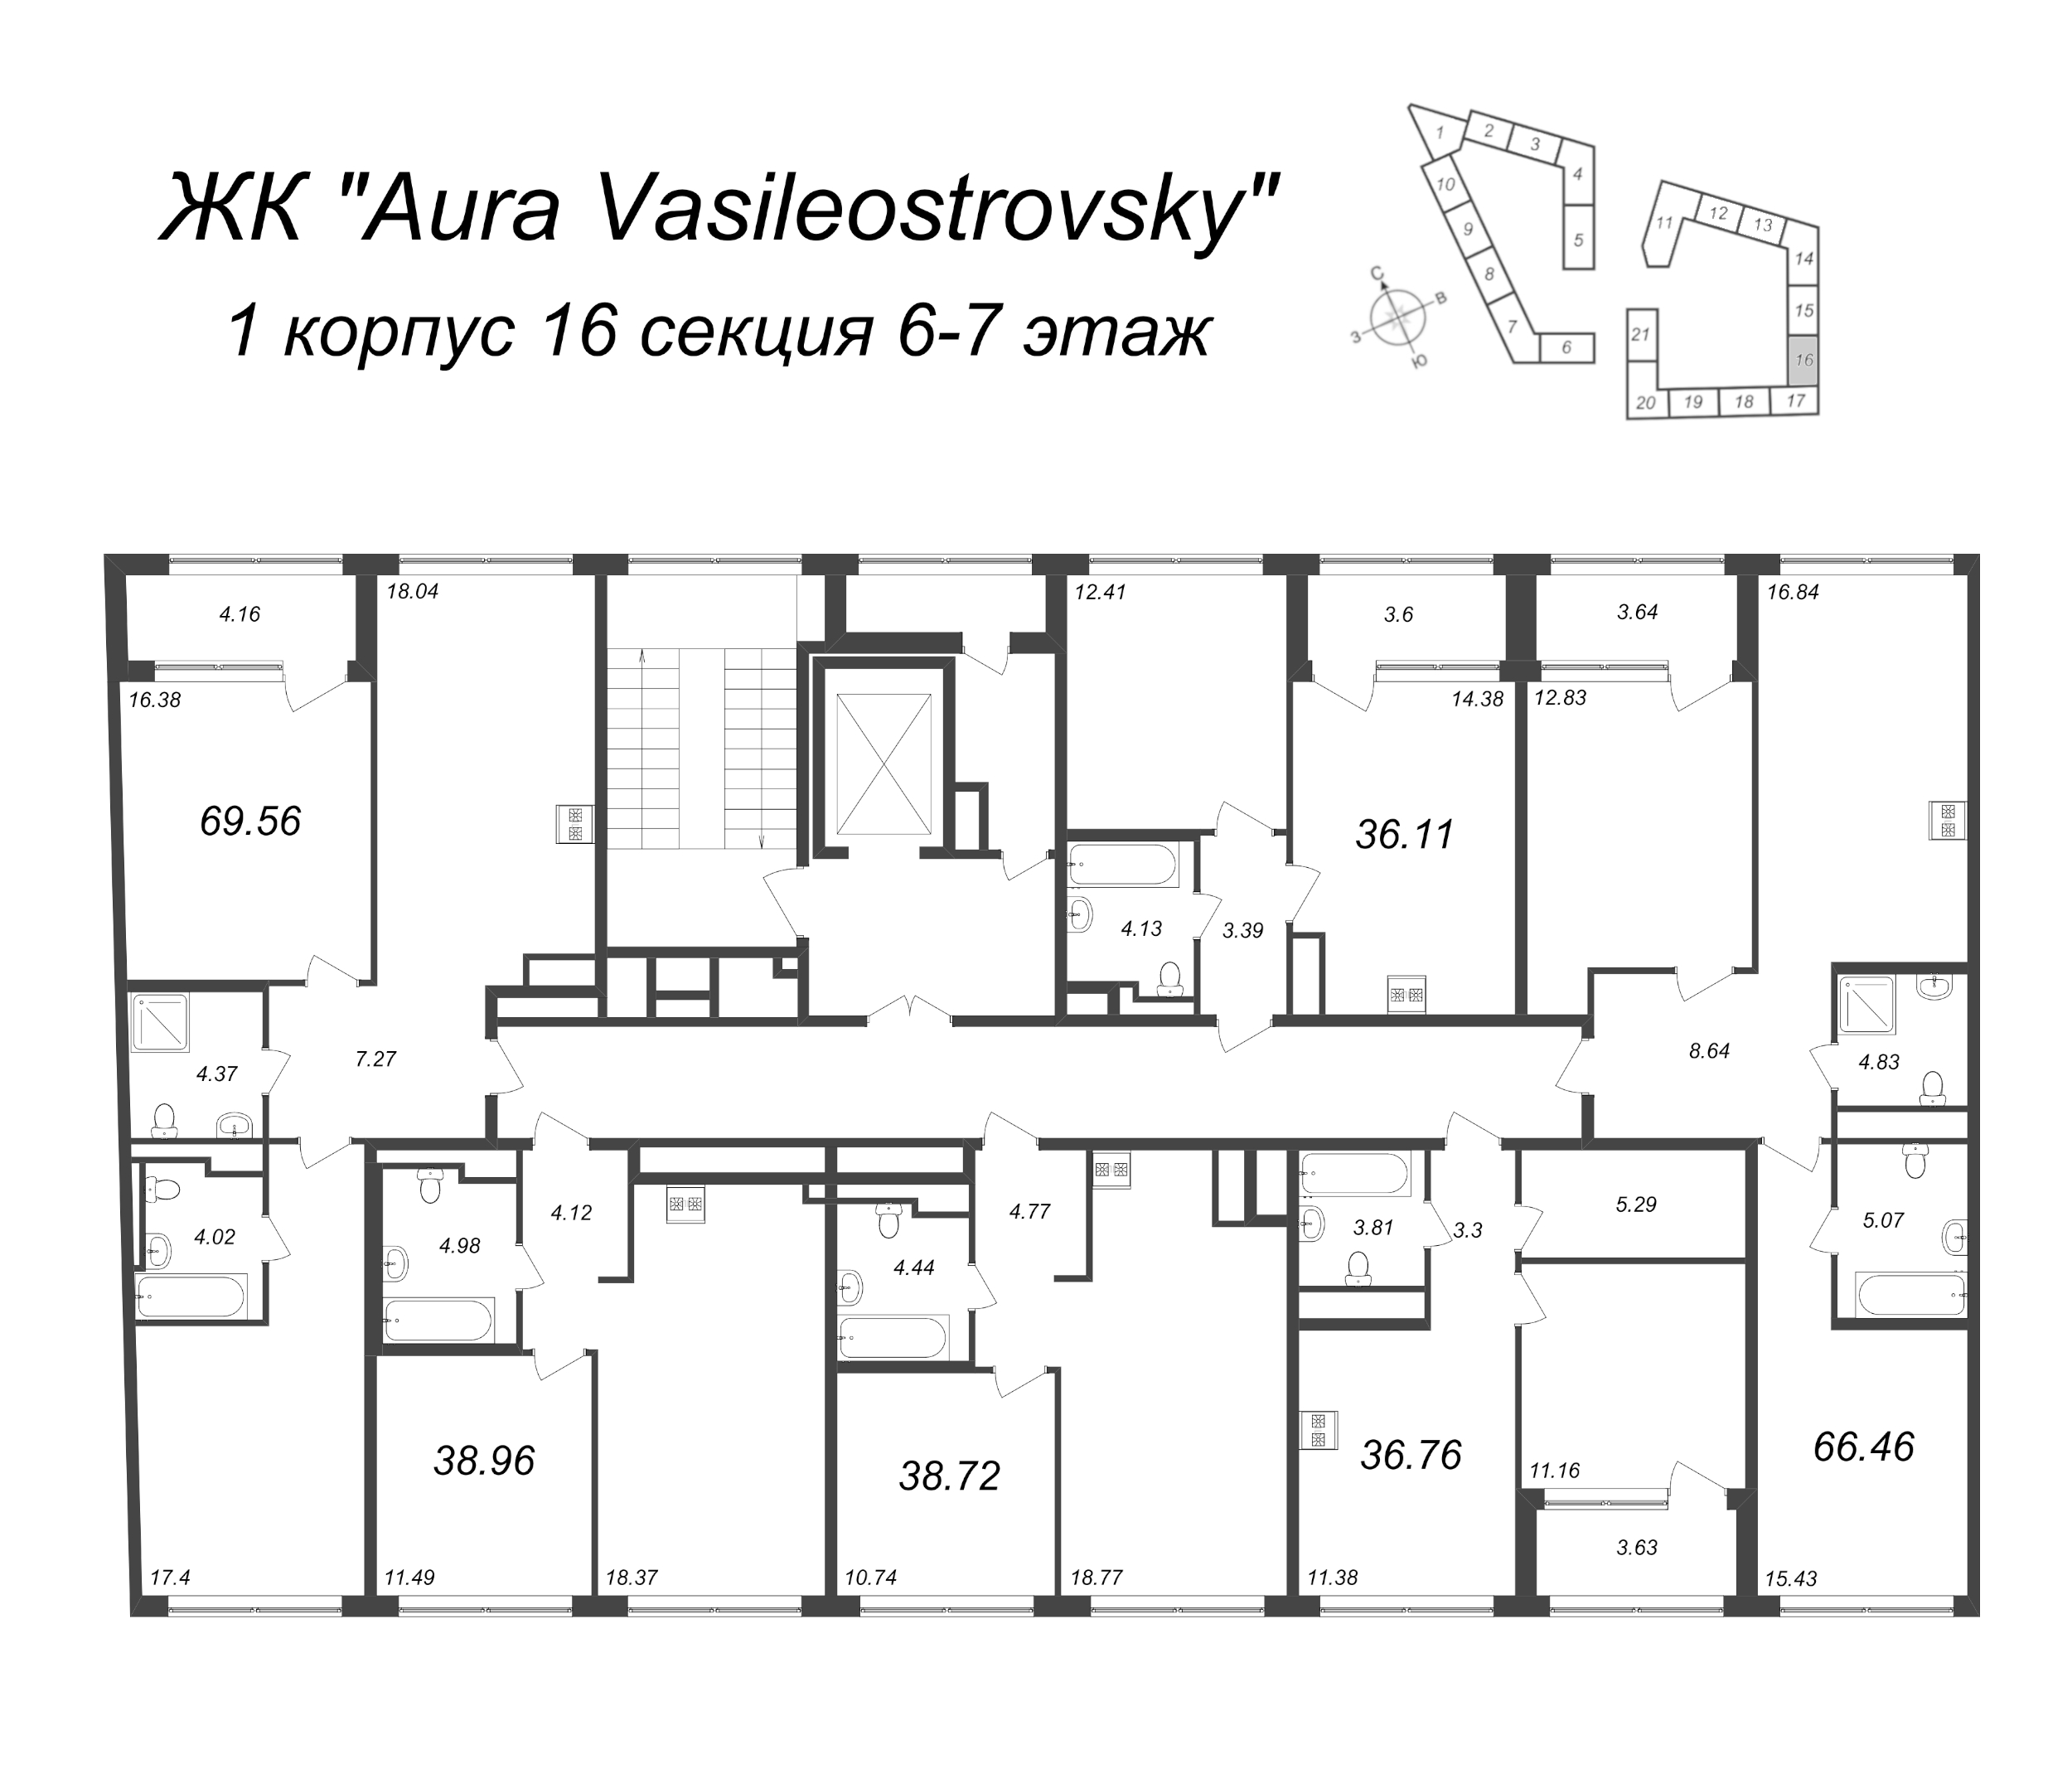 2-комнатная (Евро) квартира, 38.96 м² - планировка этажа